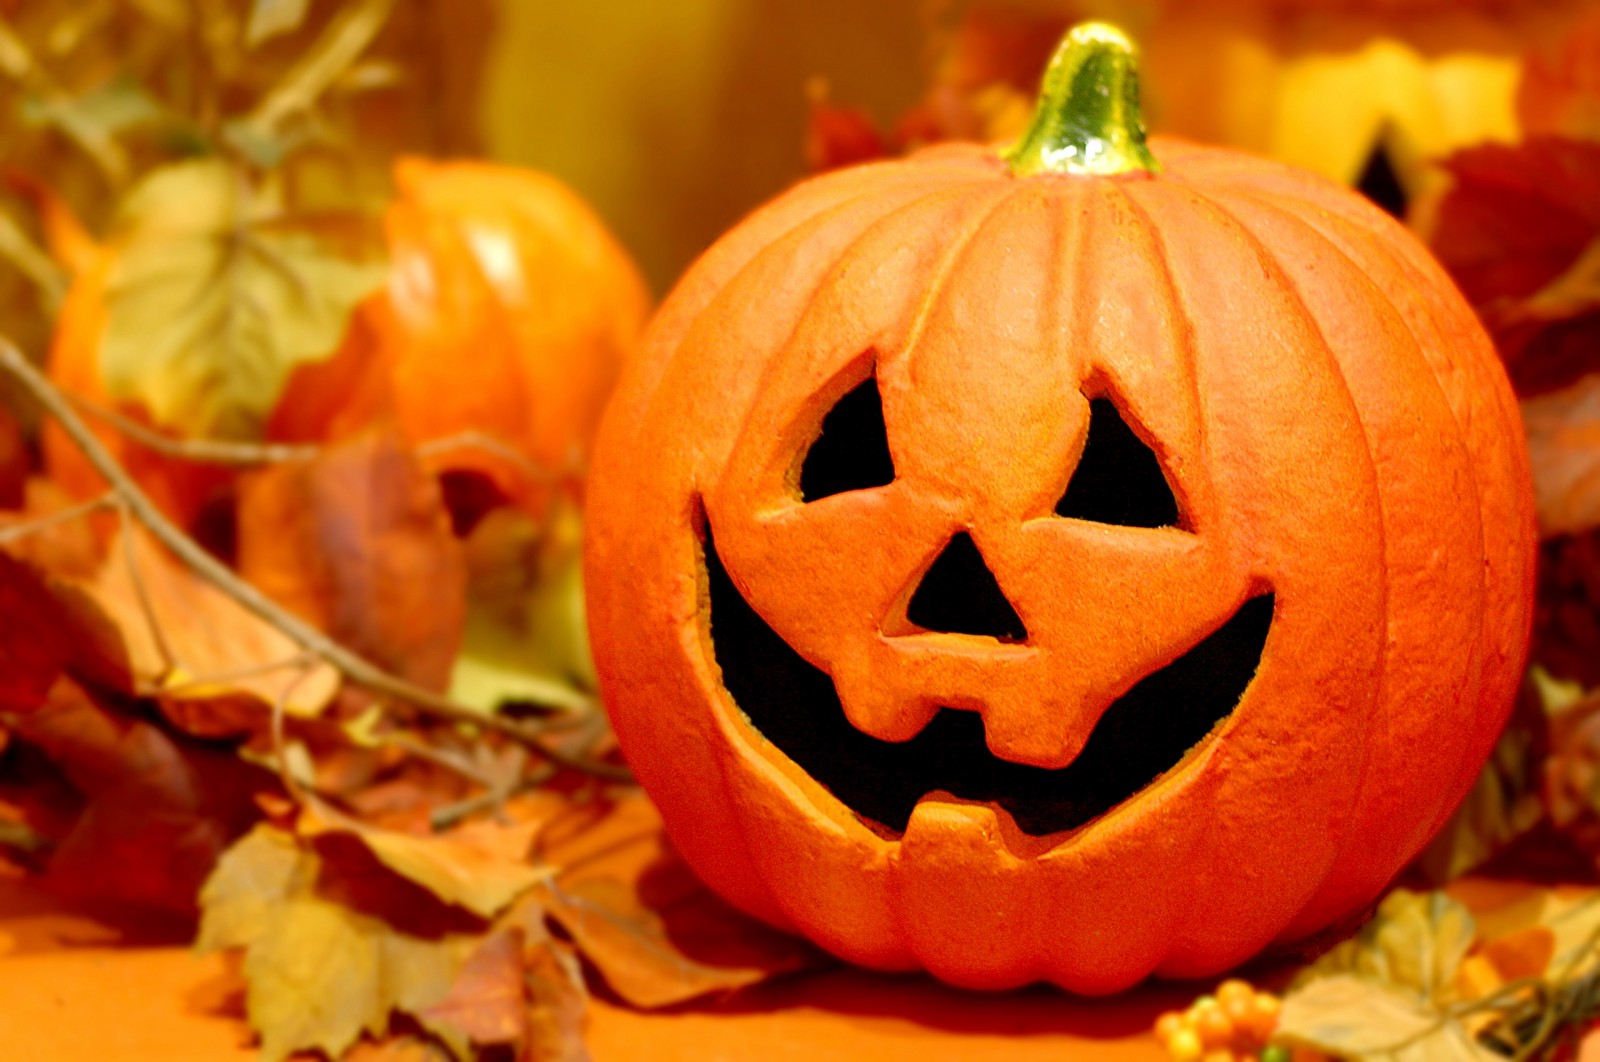 Halloween vibes: Jack-o'-lantern